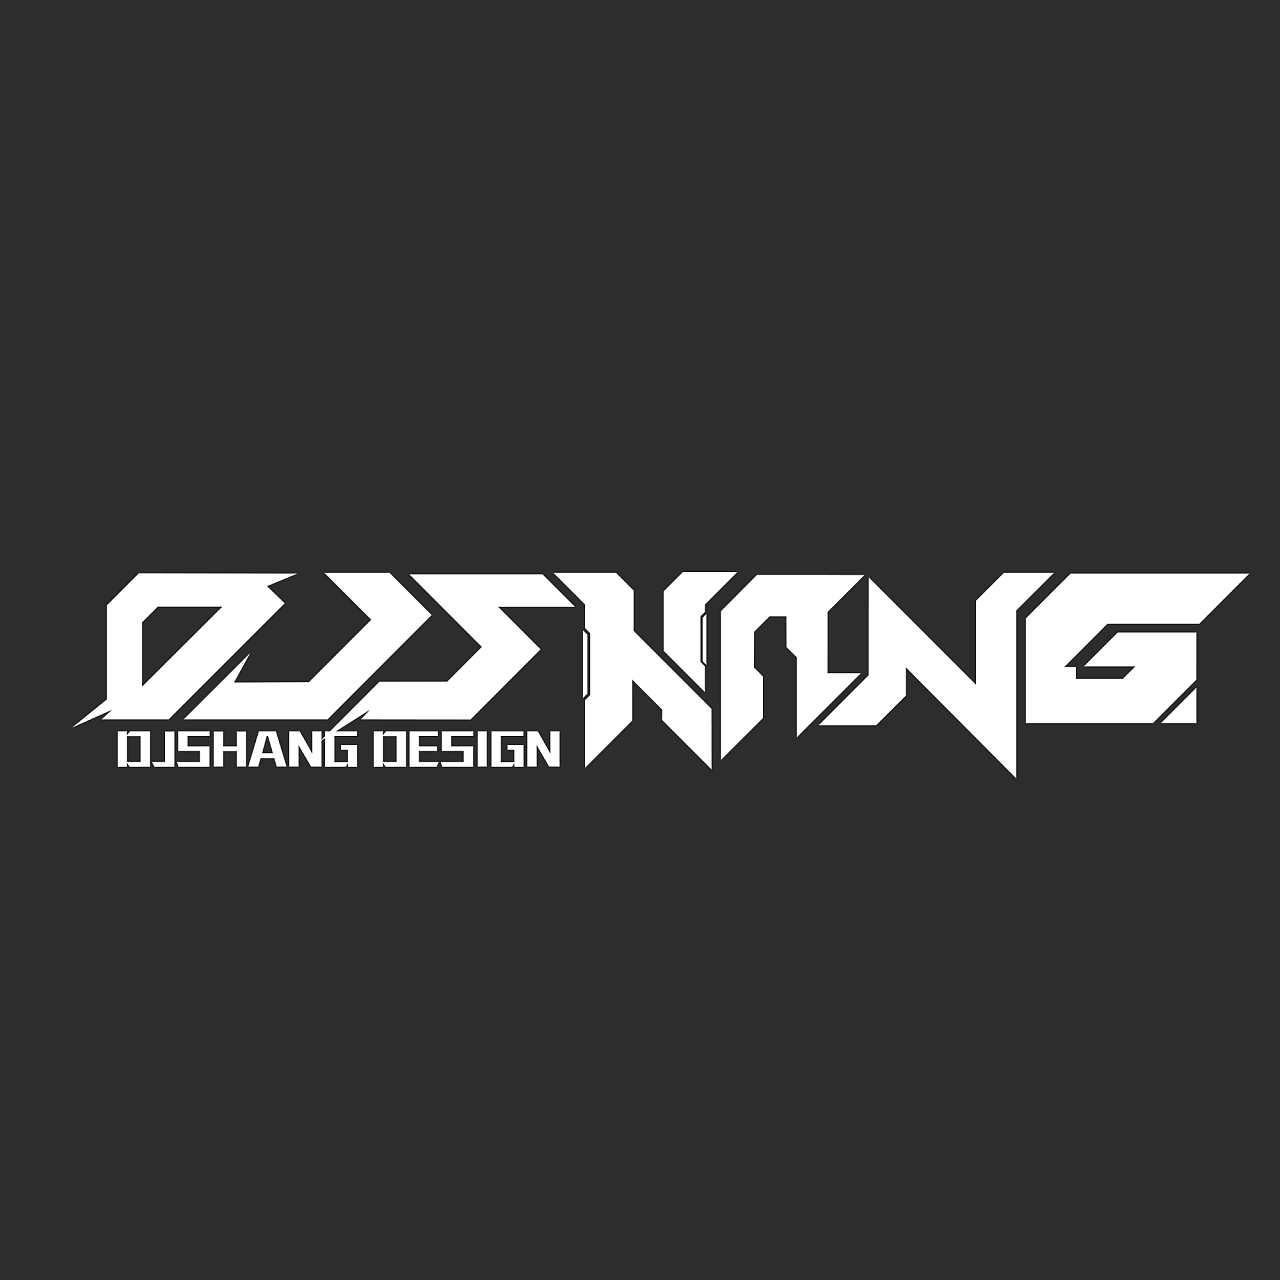 djshang 个人logo设计